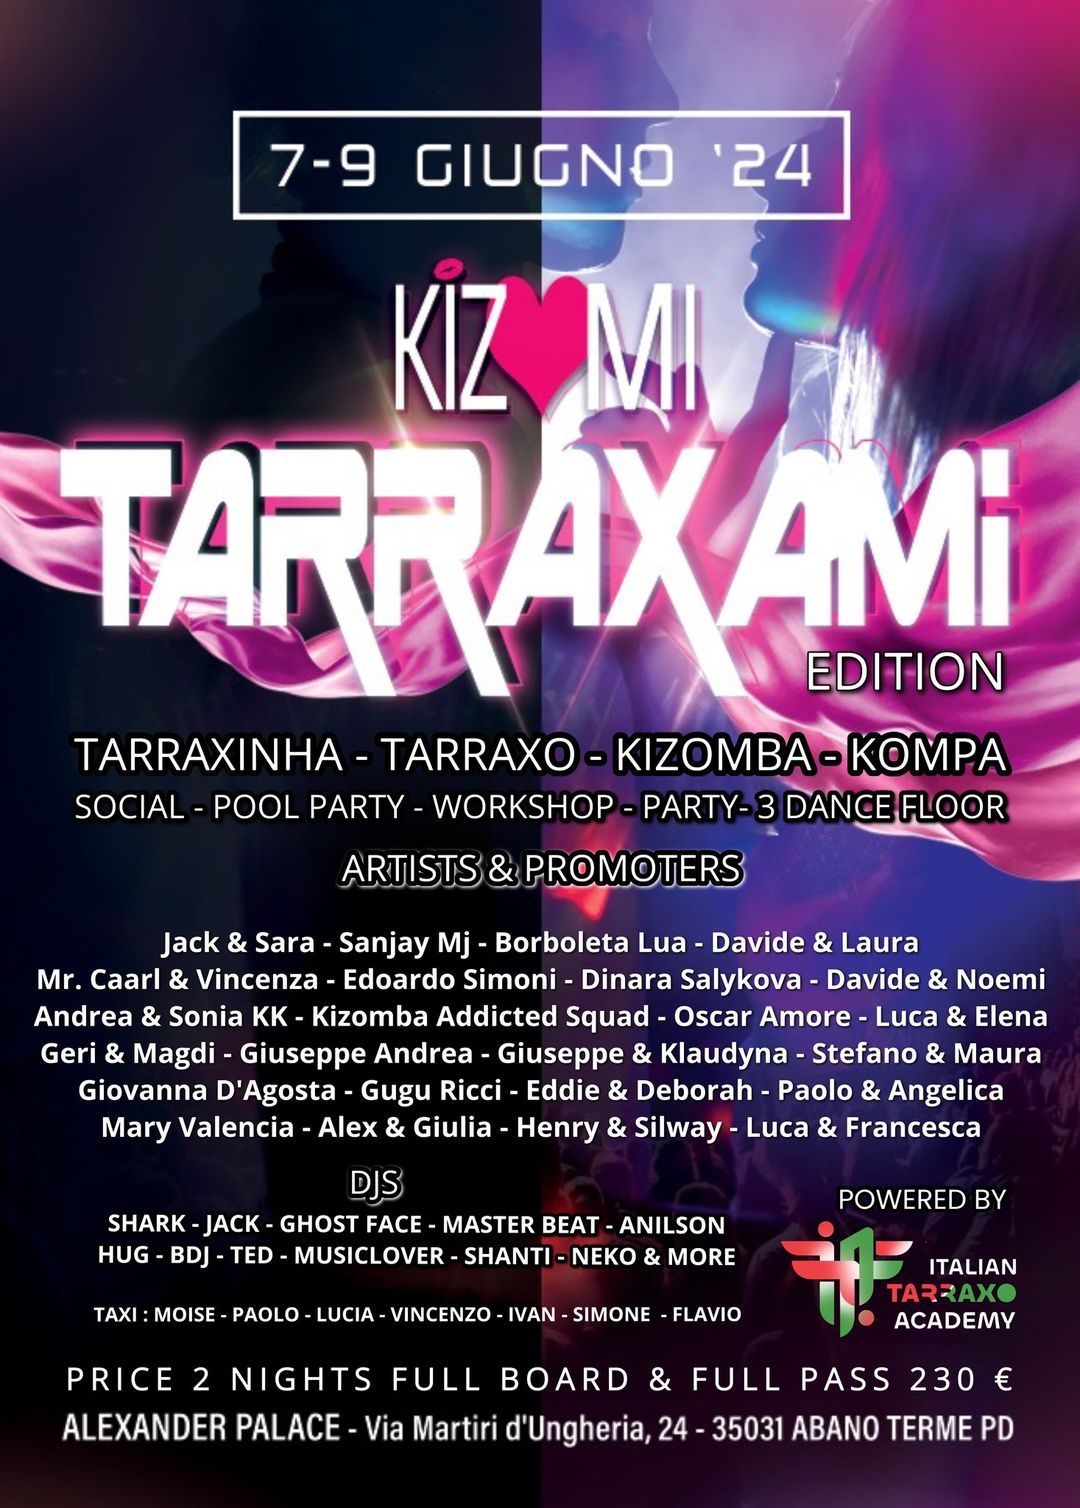 TARRAXAMI 1st Edition by KIZMI Abano Terme PD